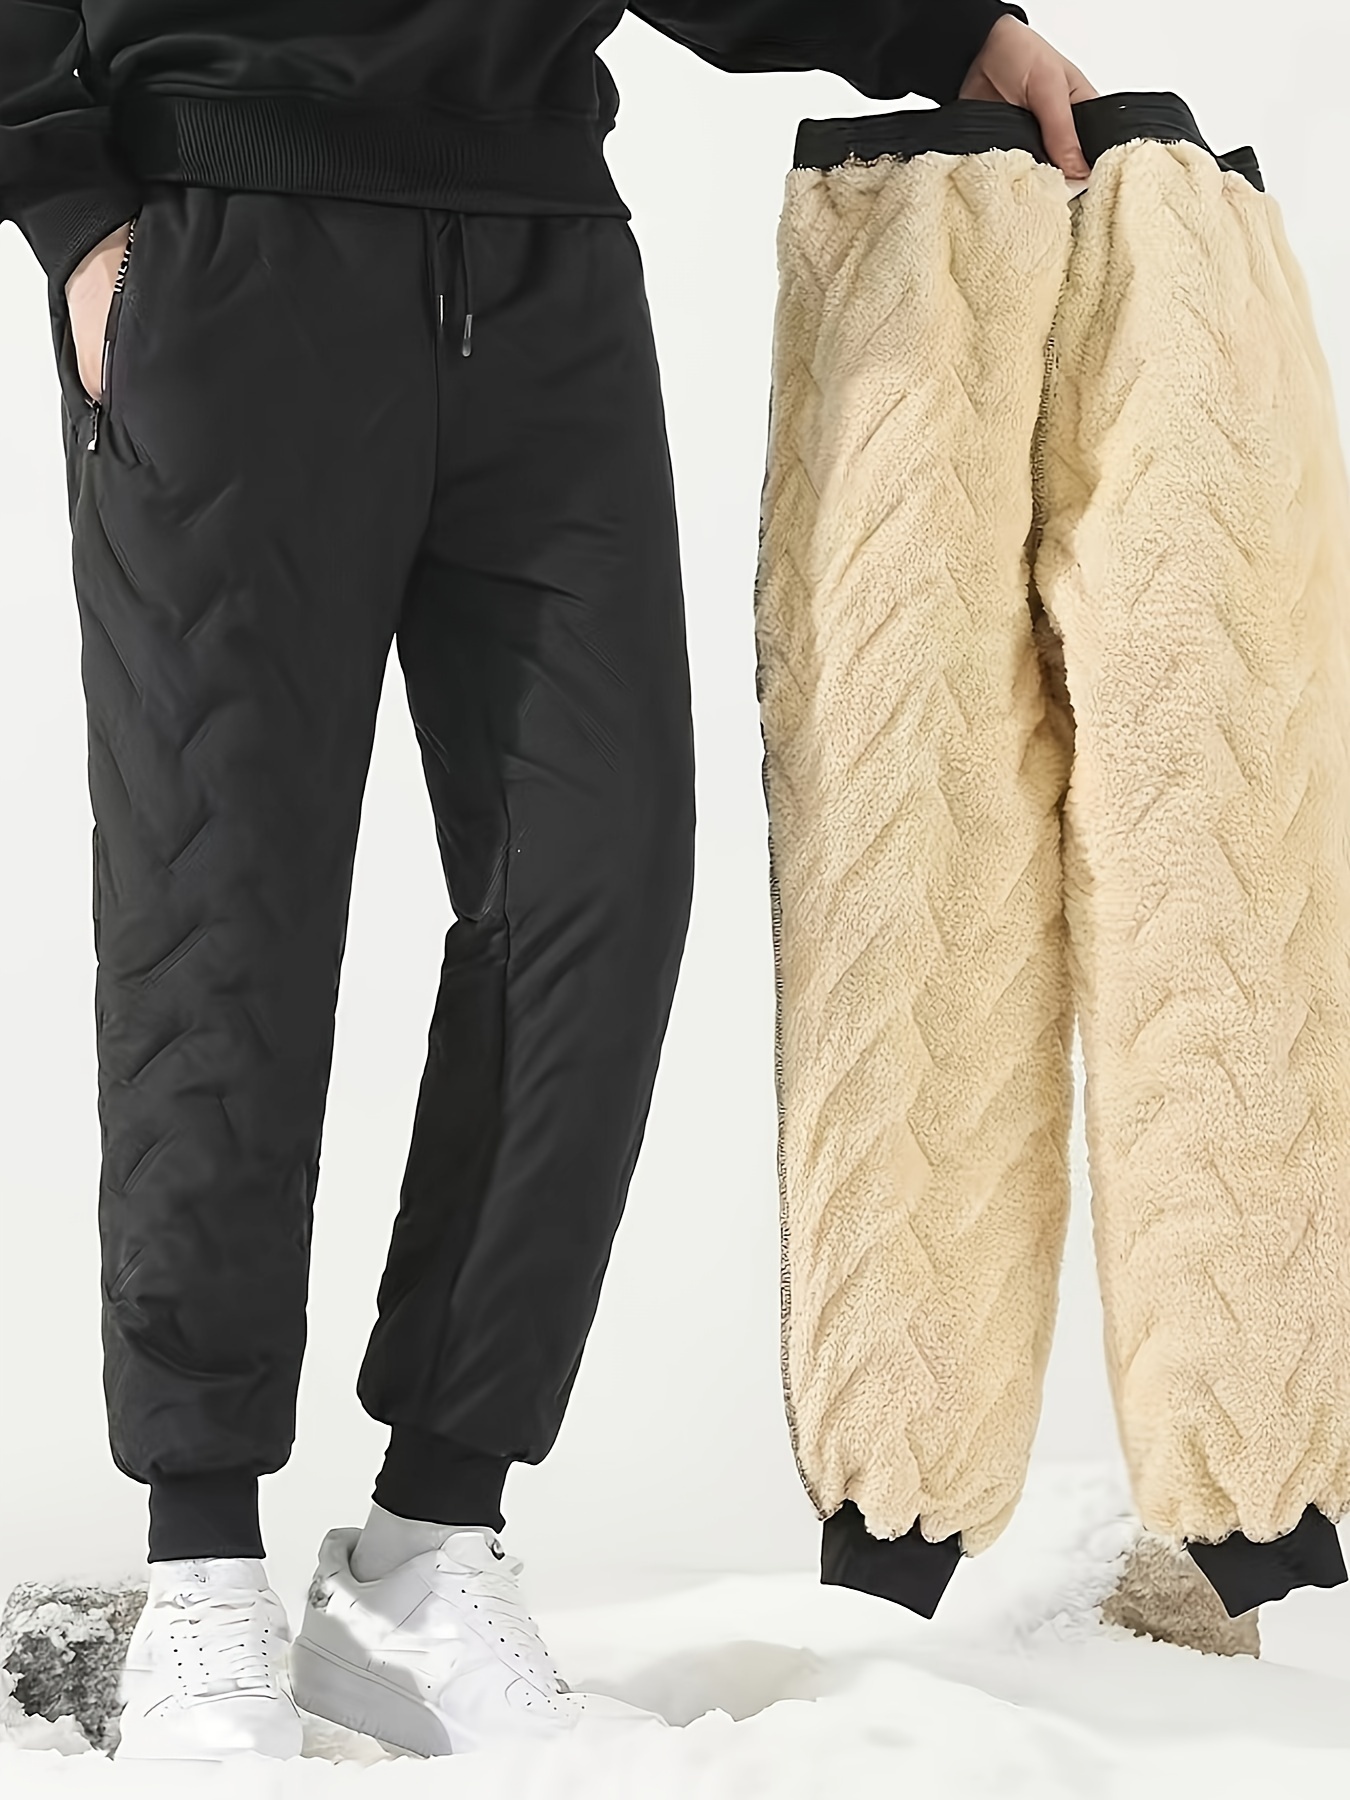  Pantalones térmicos de invierno con forro polar para